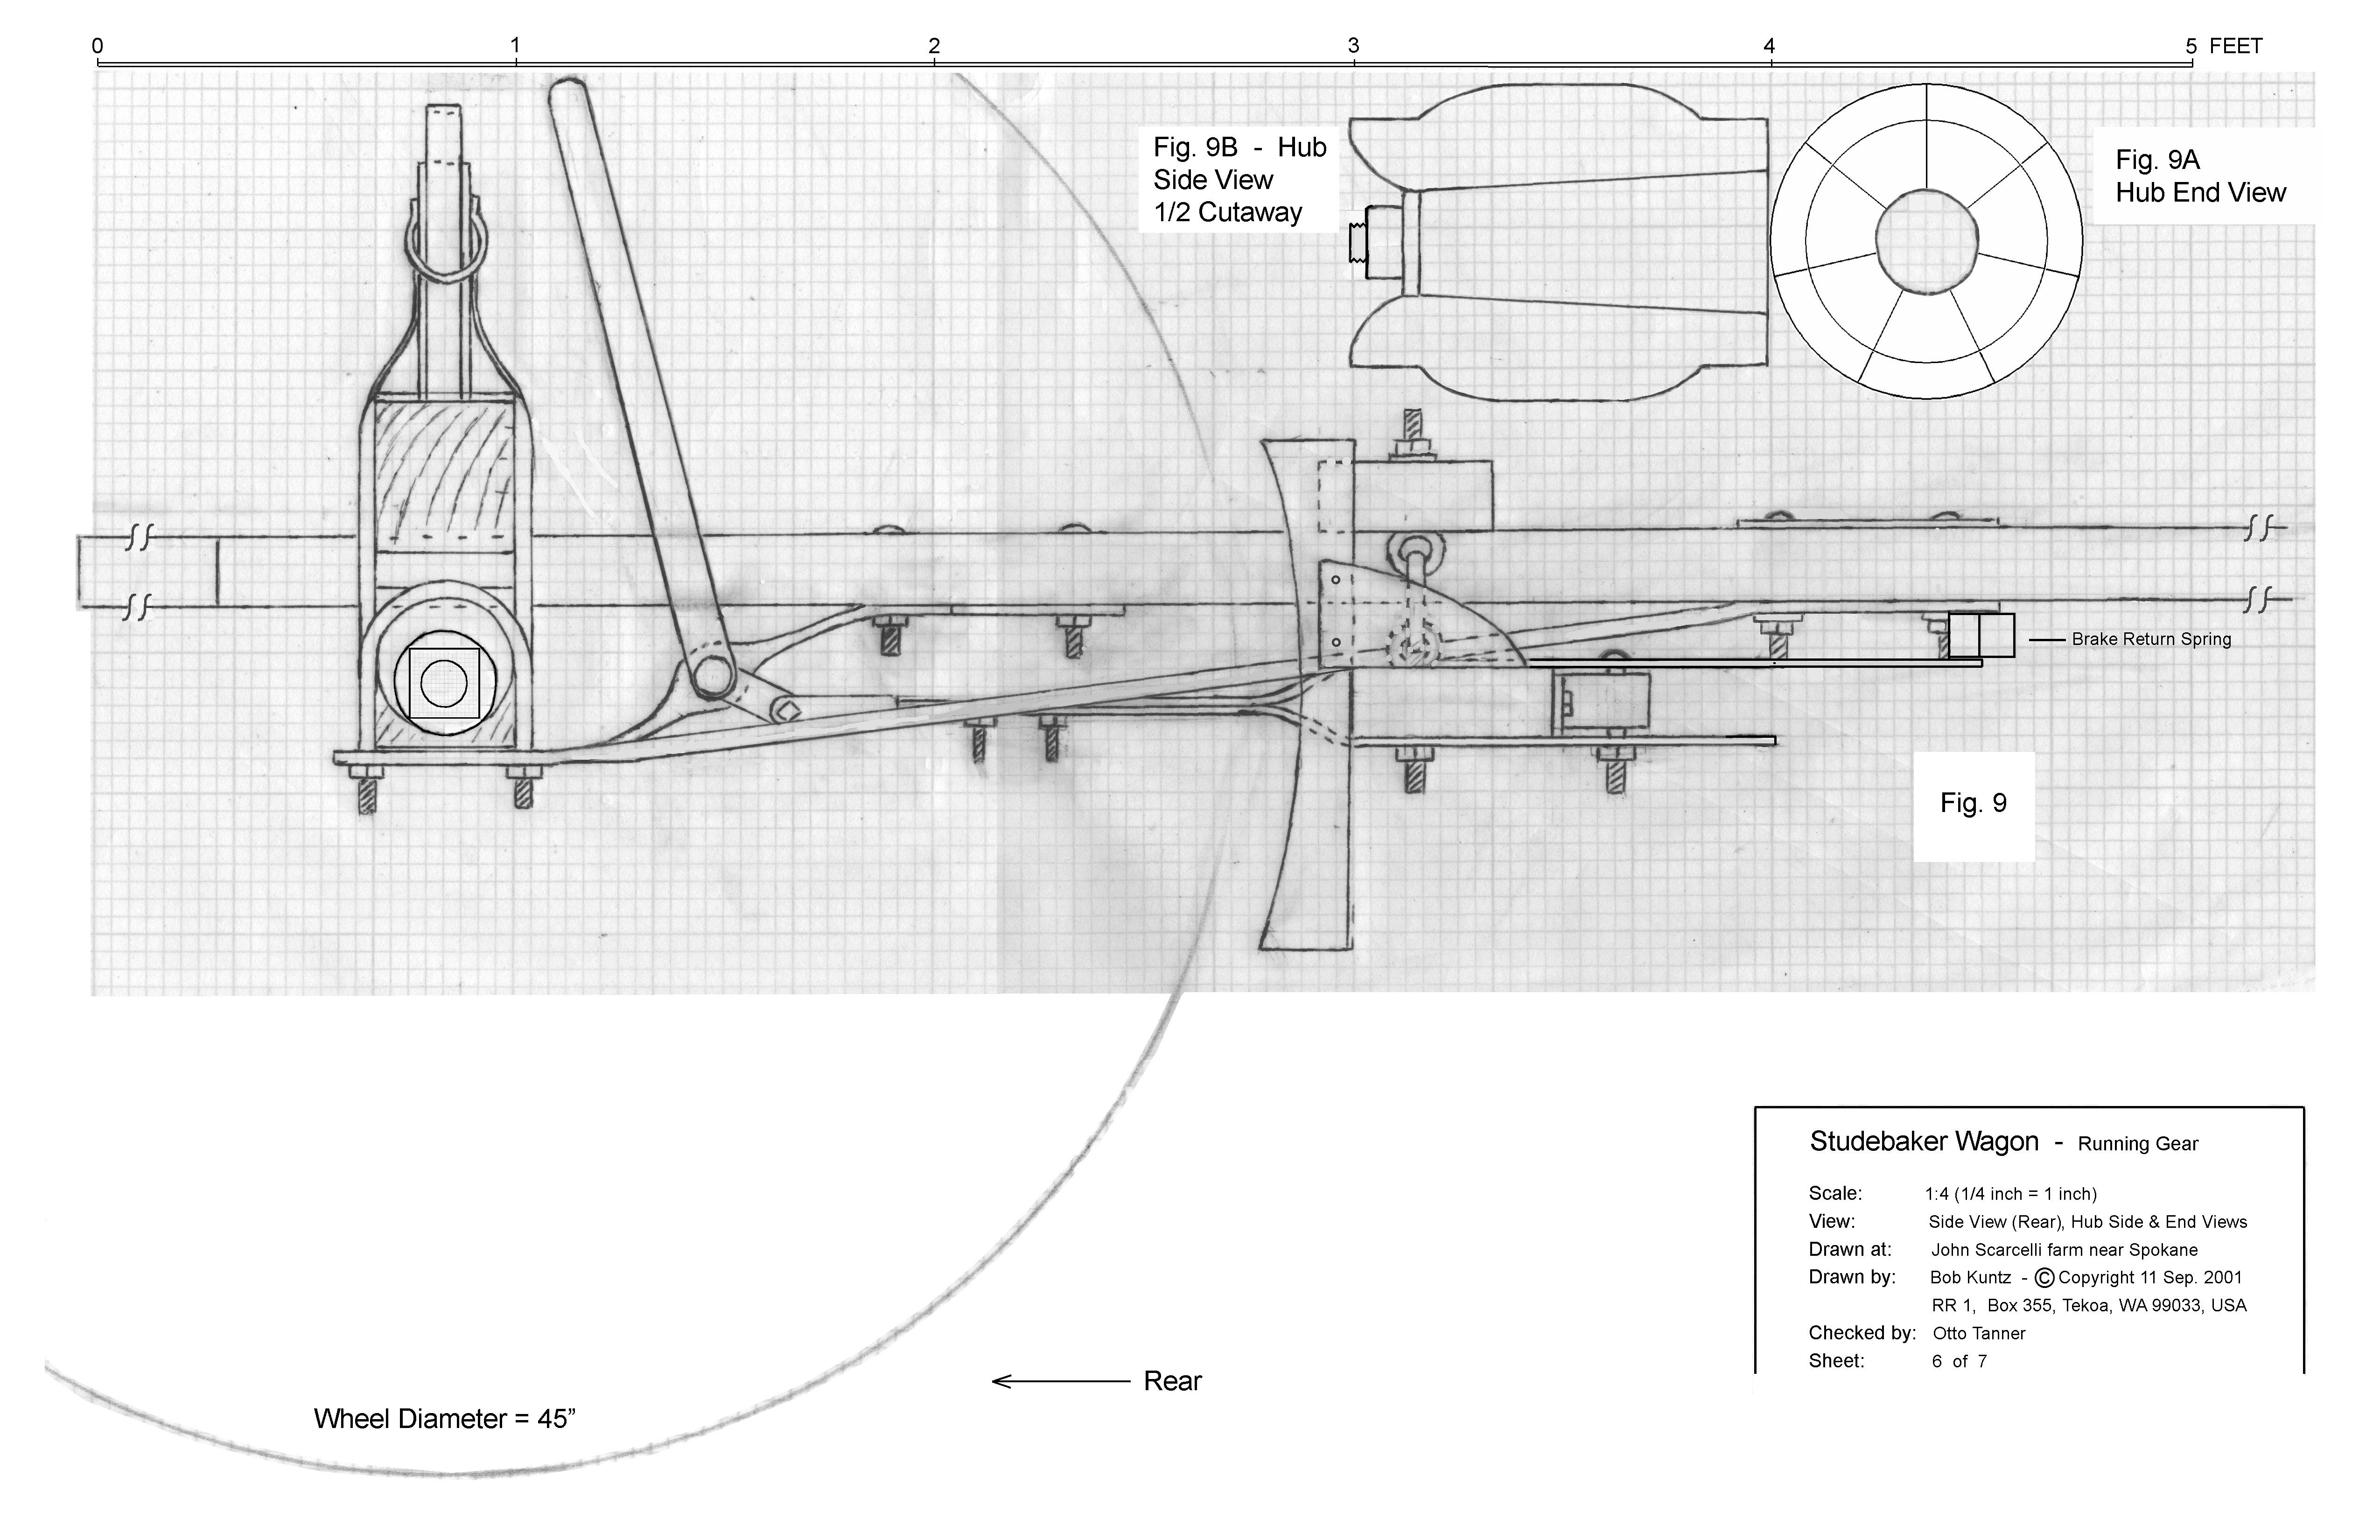 Studebaker Wagon Plans - Sheet 6 